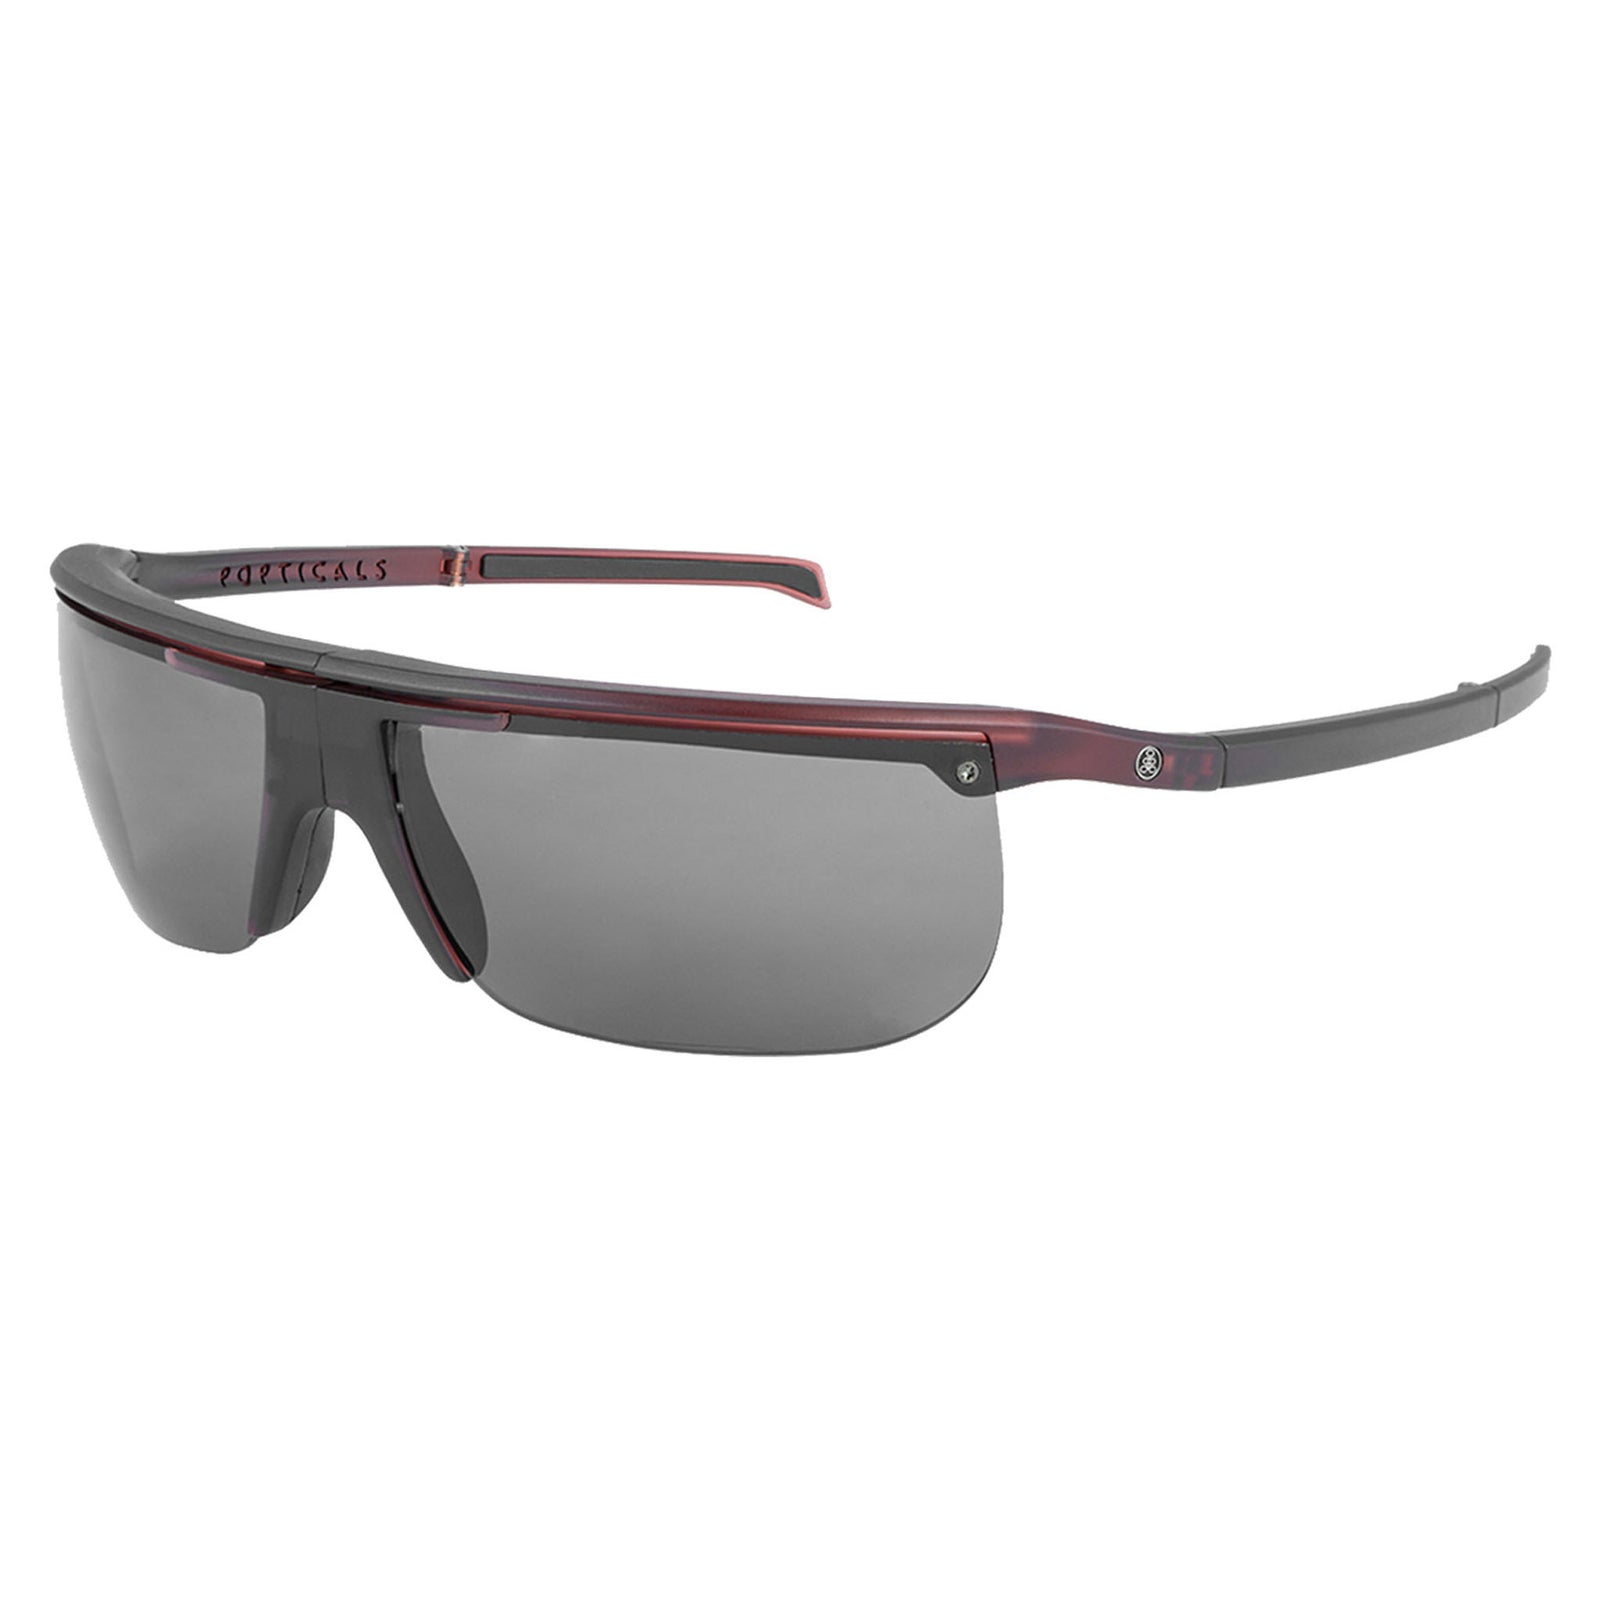 Popticals, Premium Compact Sunglasses, PopArt, 020030-WYGP, Polarized Sunglasses, Matte Wine Crystal, Gray Lenses, Glam View